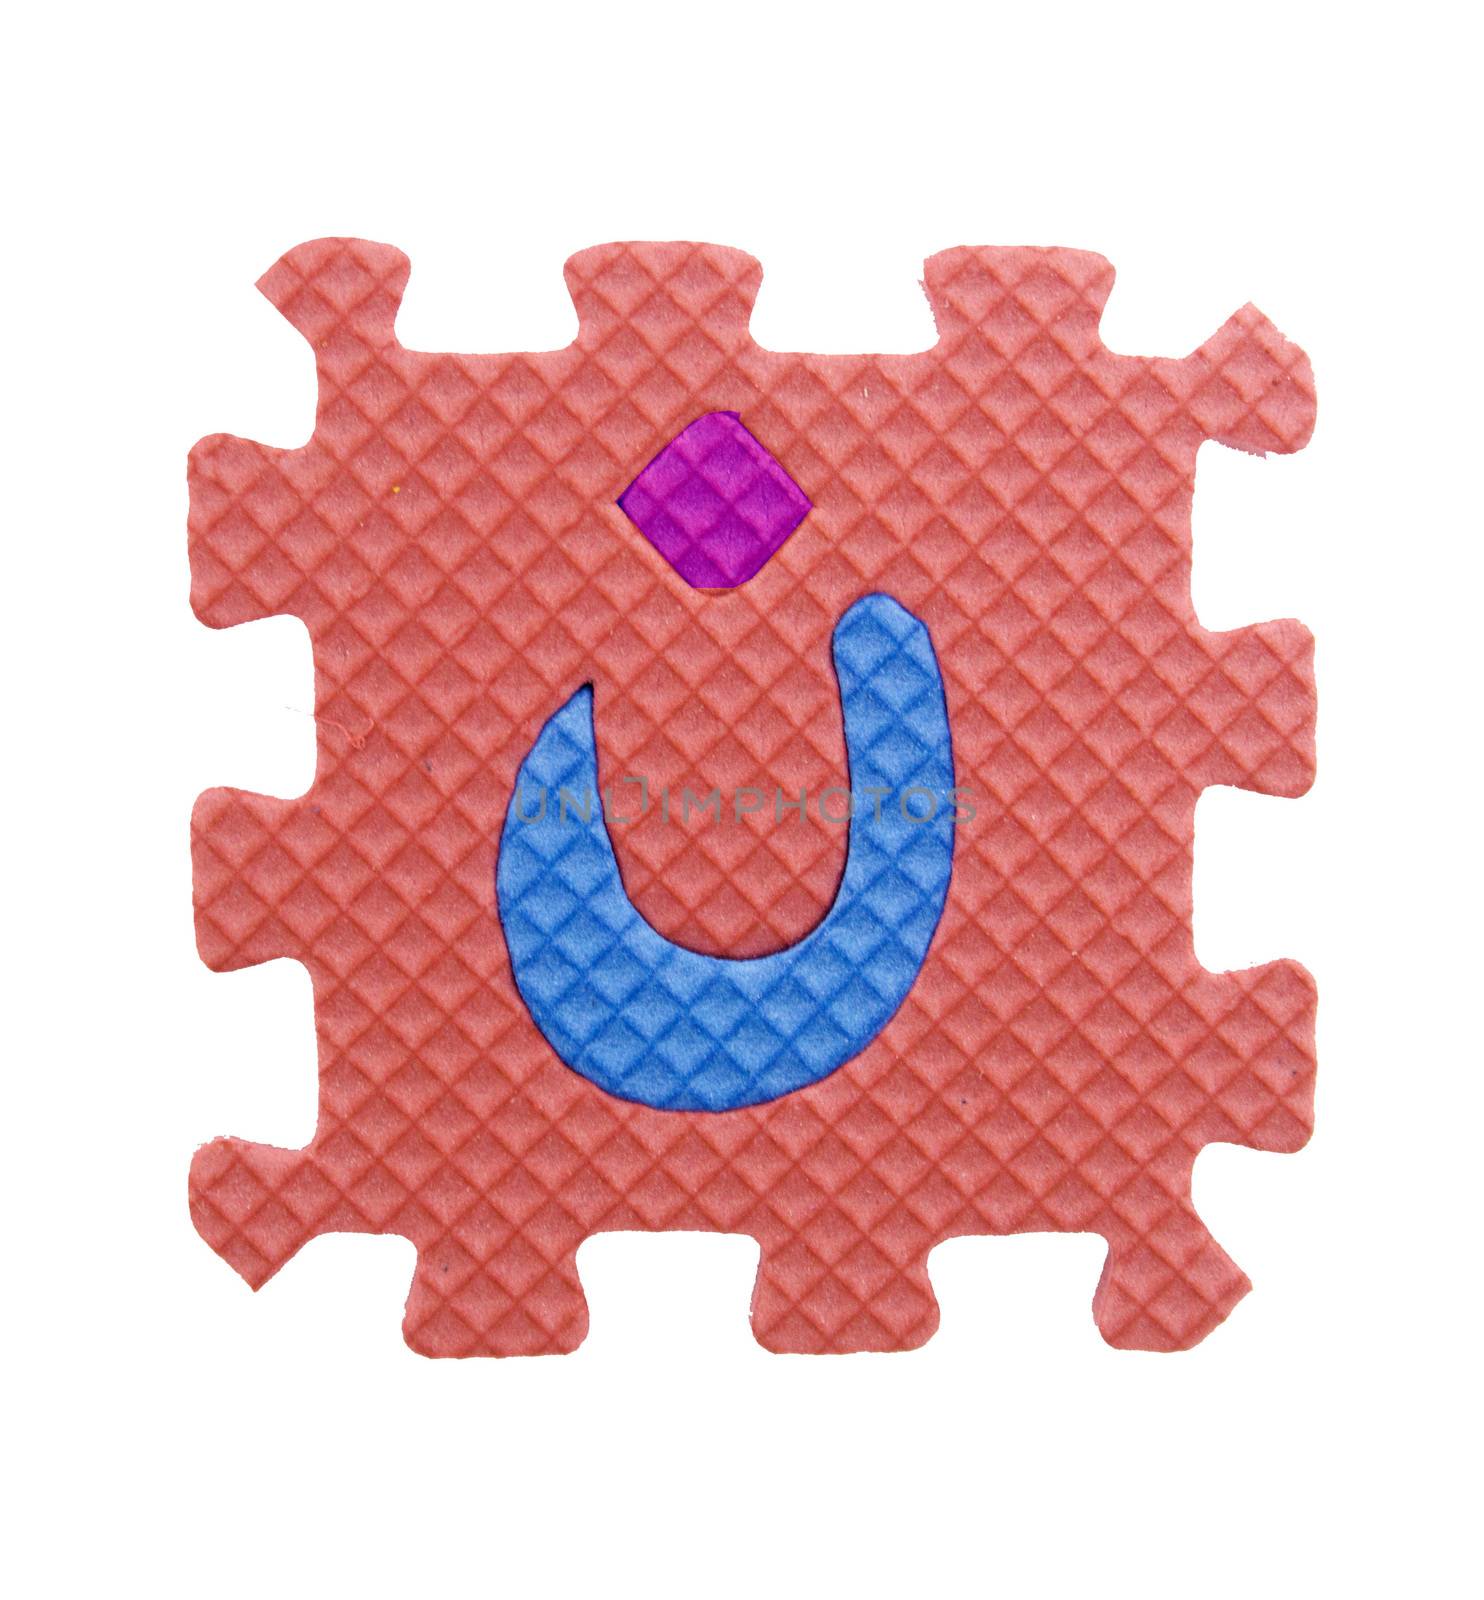 Arabic Alphabet puzzle by designsstock